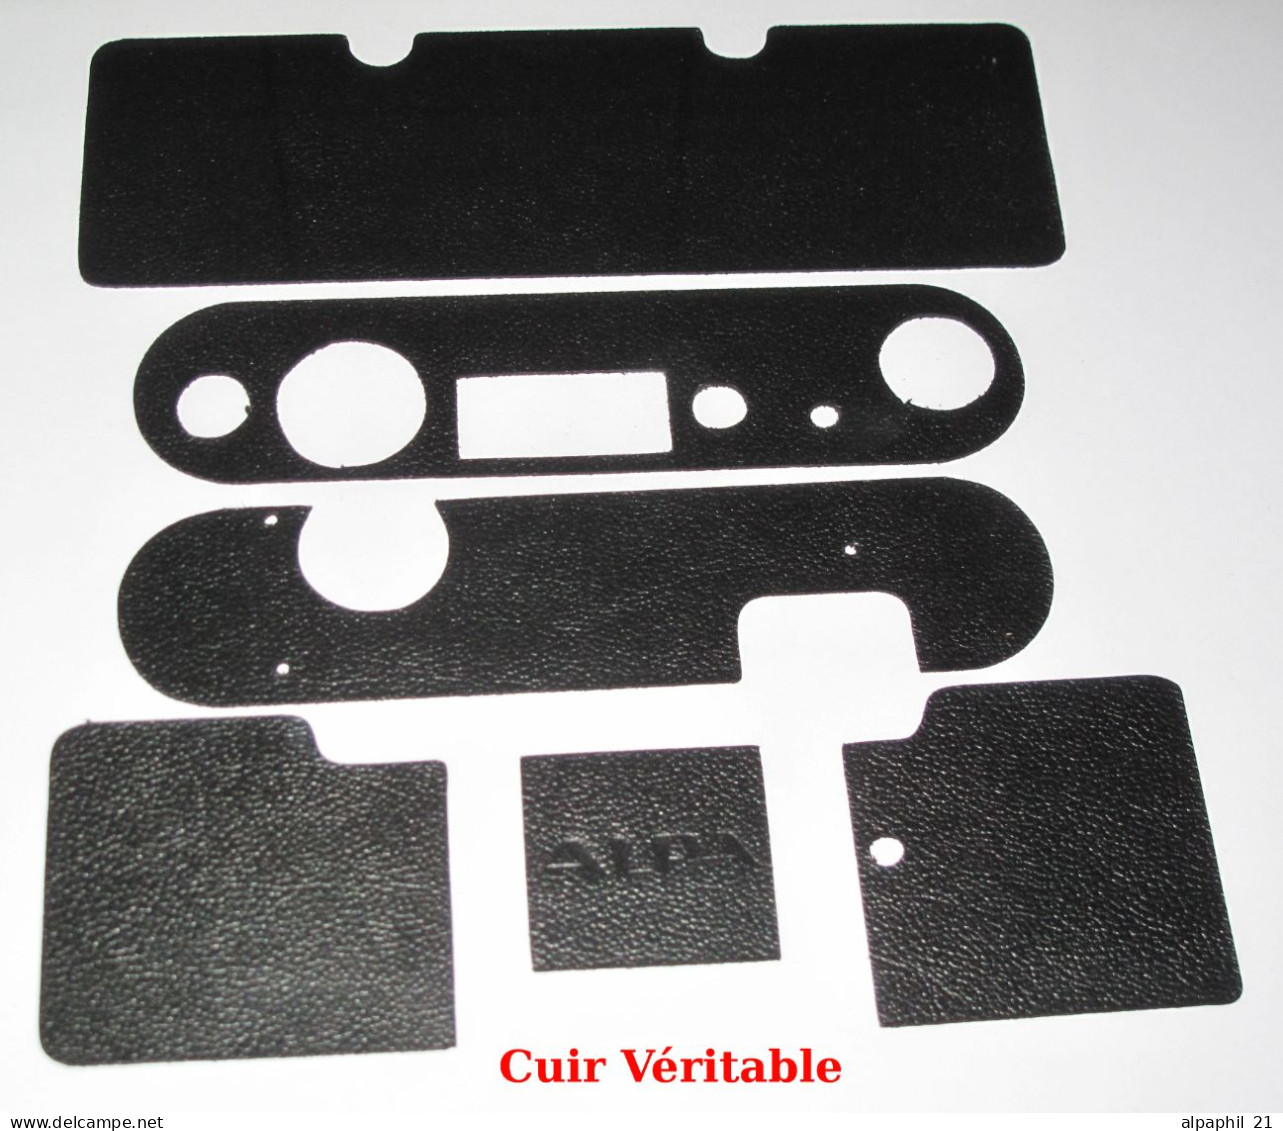 Alpa Reflex, Black Veritable Leather For Alpa Standard - Supplies And Equipment